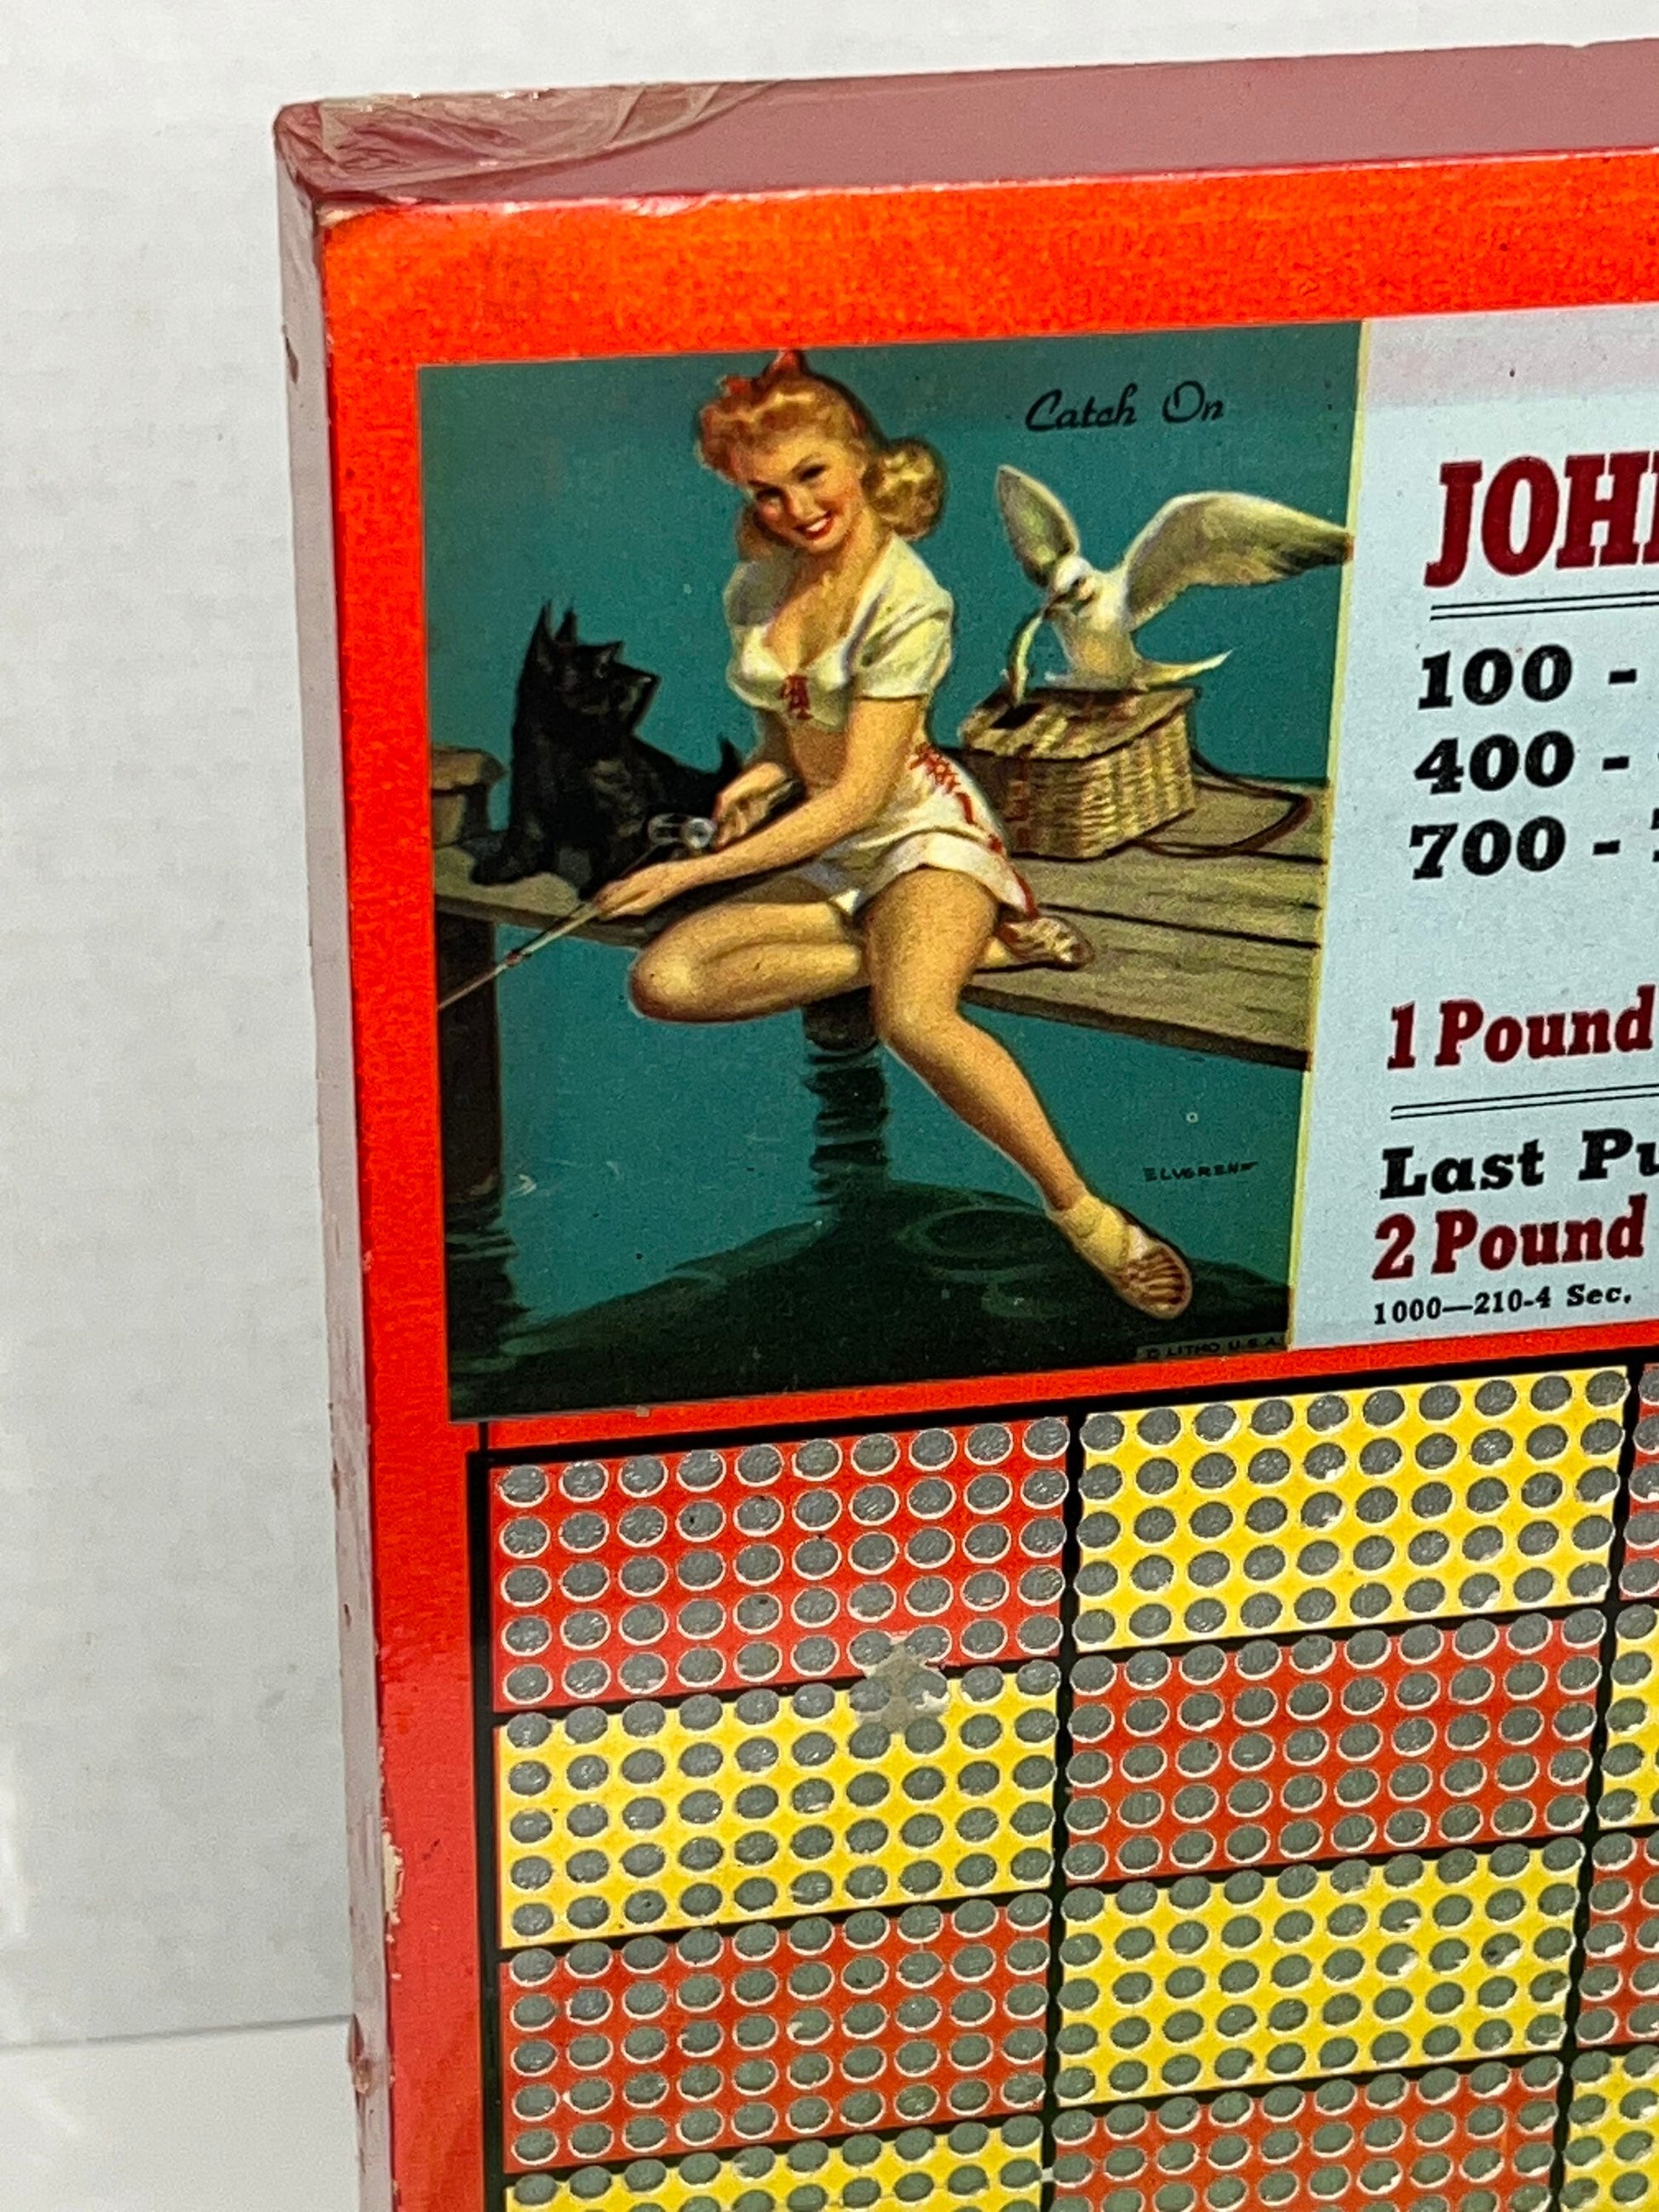 Vintage pinup girl trade stimulator gambling , Johnson’s chocolate advertising new old stock 1930-1940